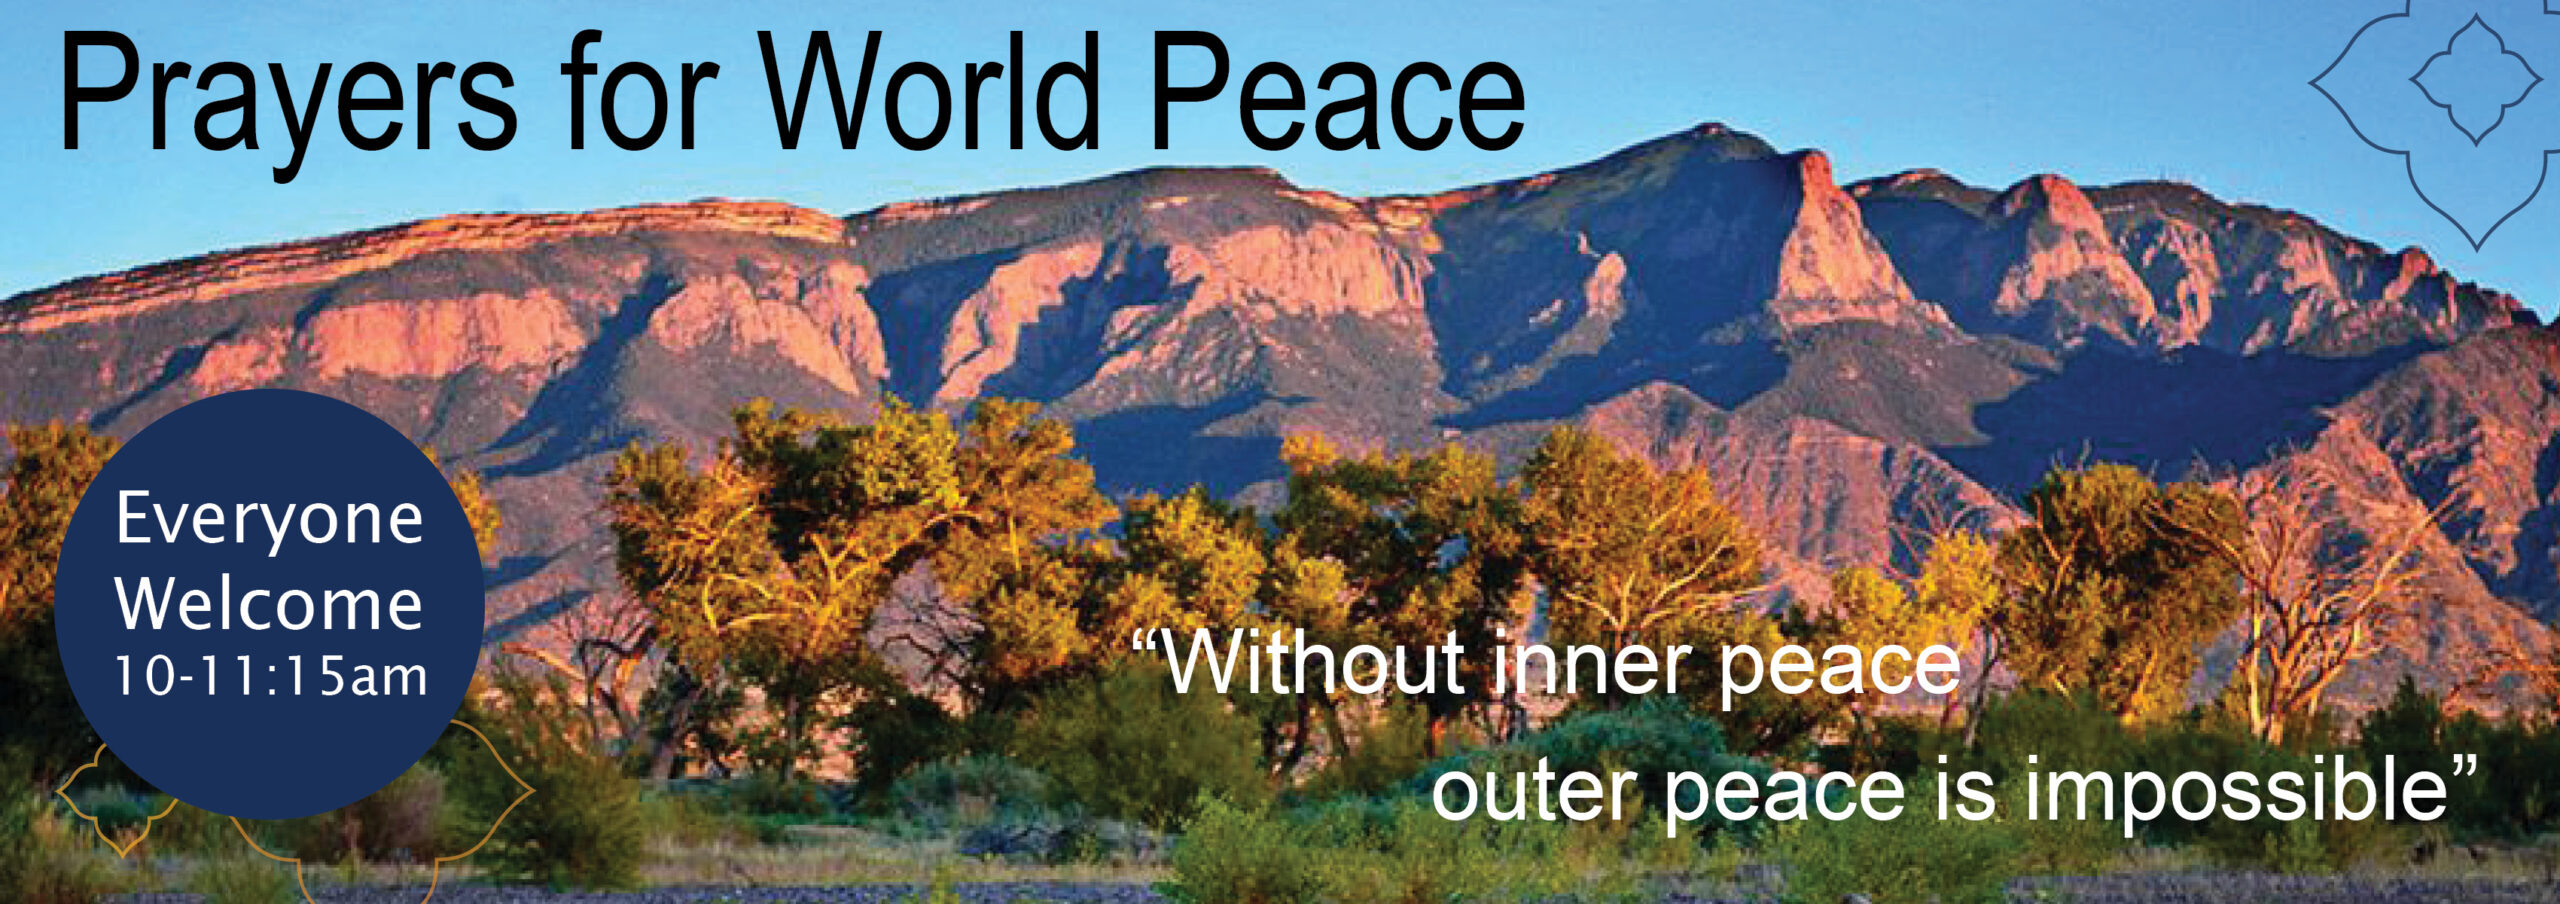 Prayers for World Peace